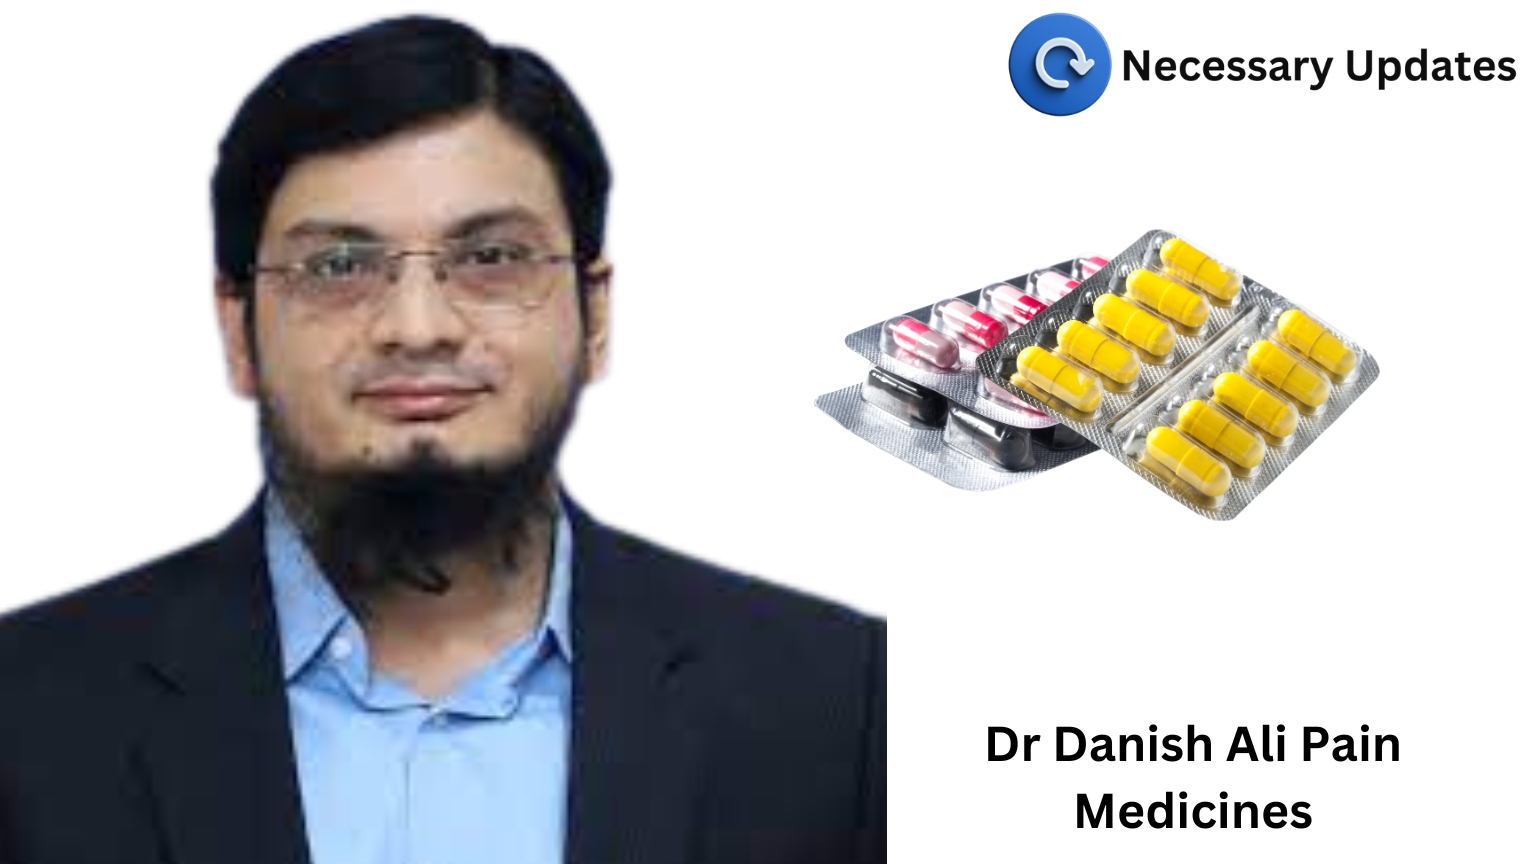 Dr. Danish Ali